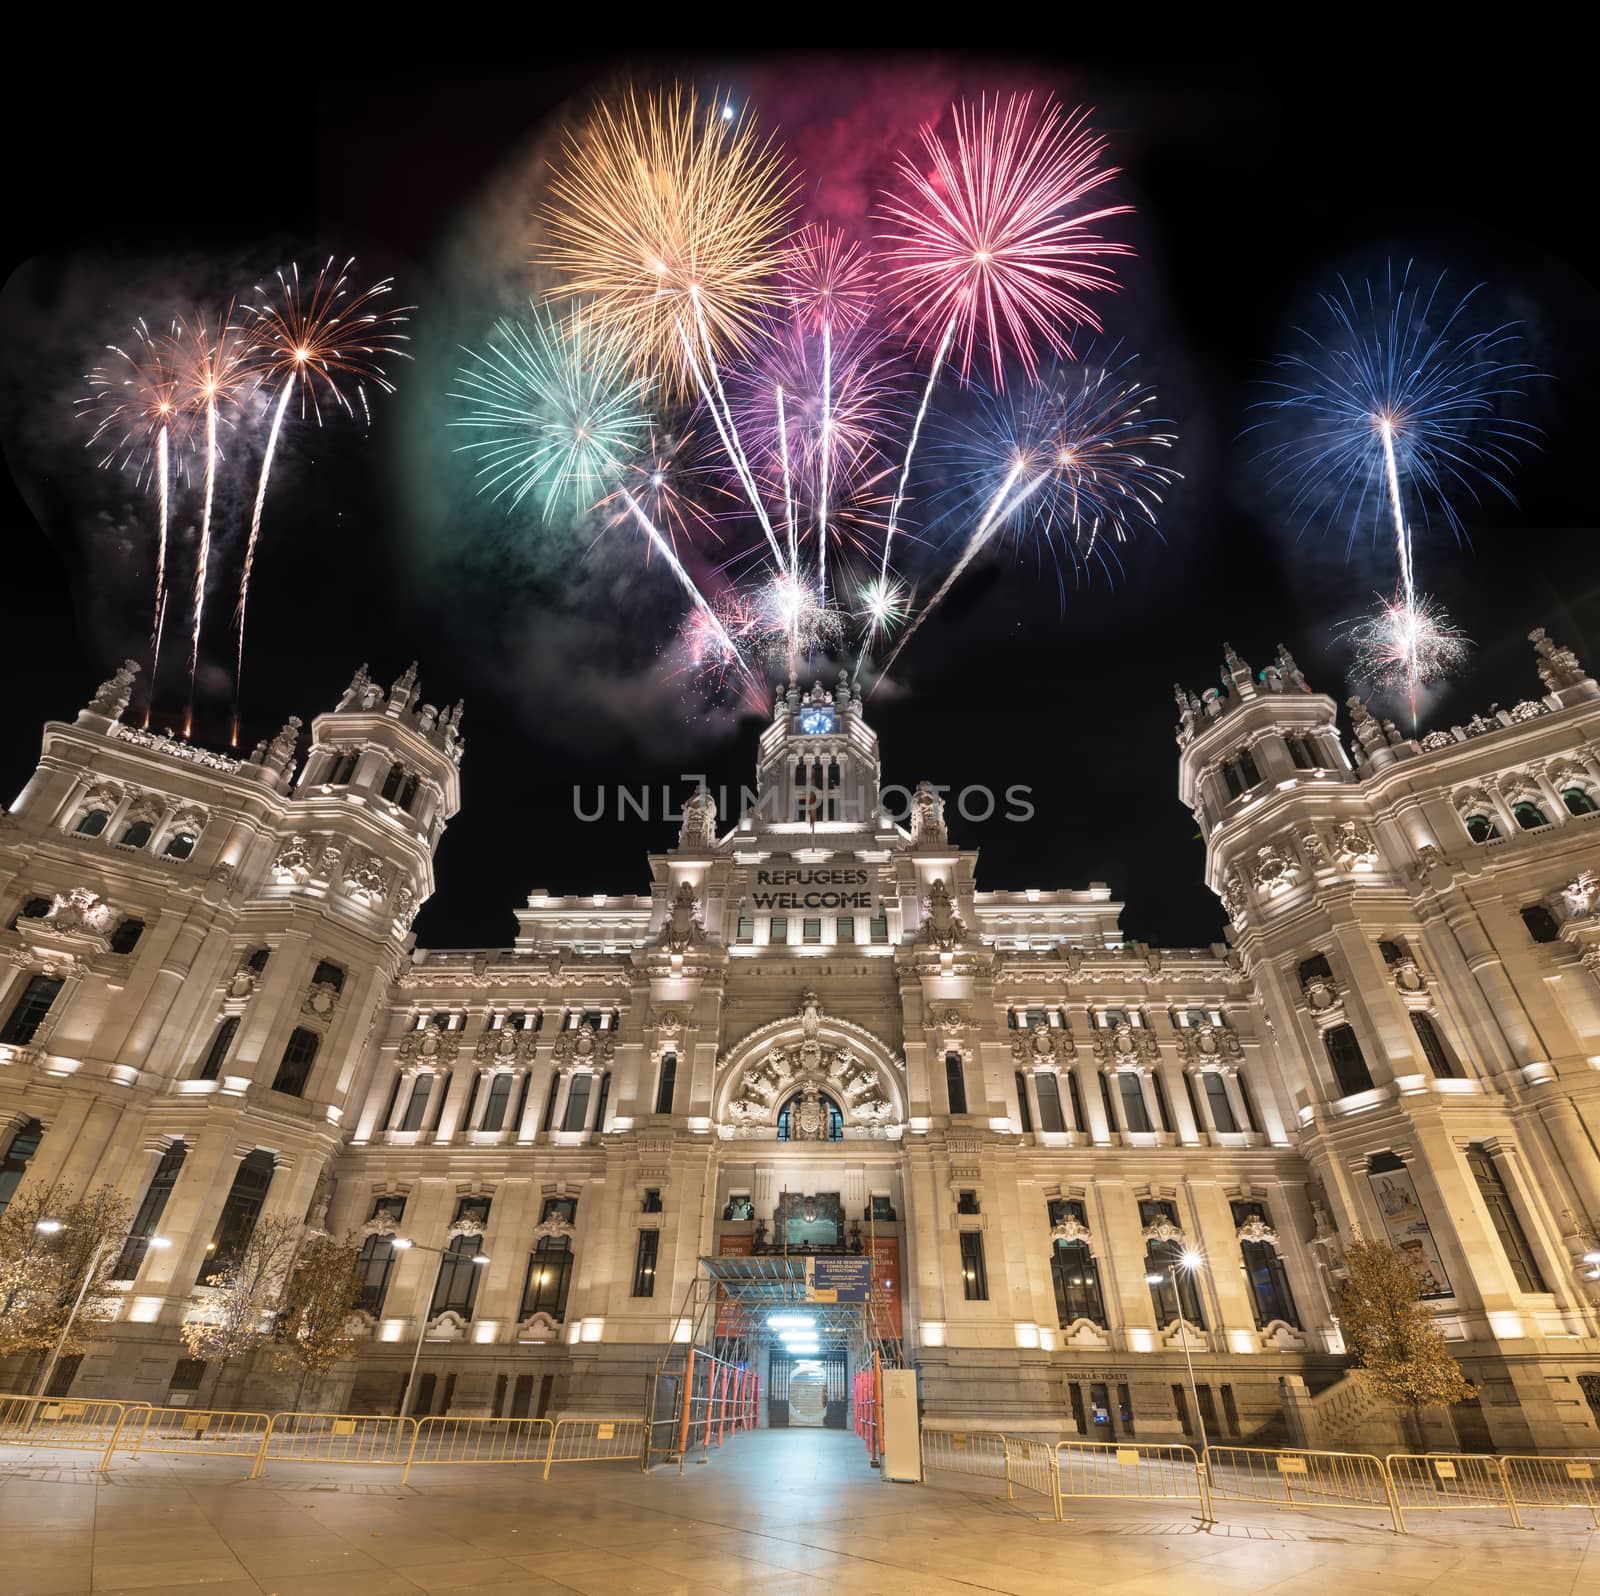 Cibeles Palace night scene fireworks display celebration, (Palacio de Cibeles) is the City Hall of Madrid.